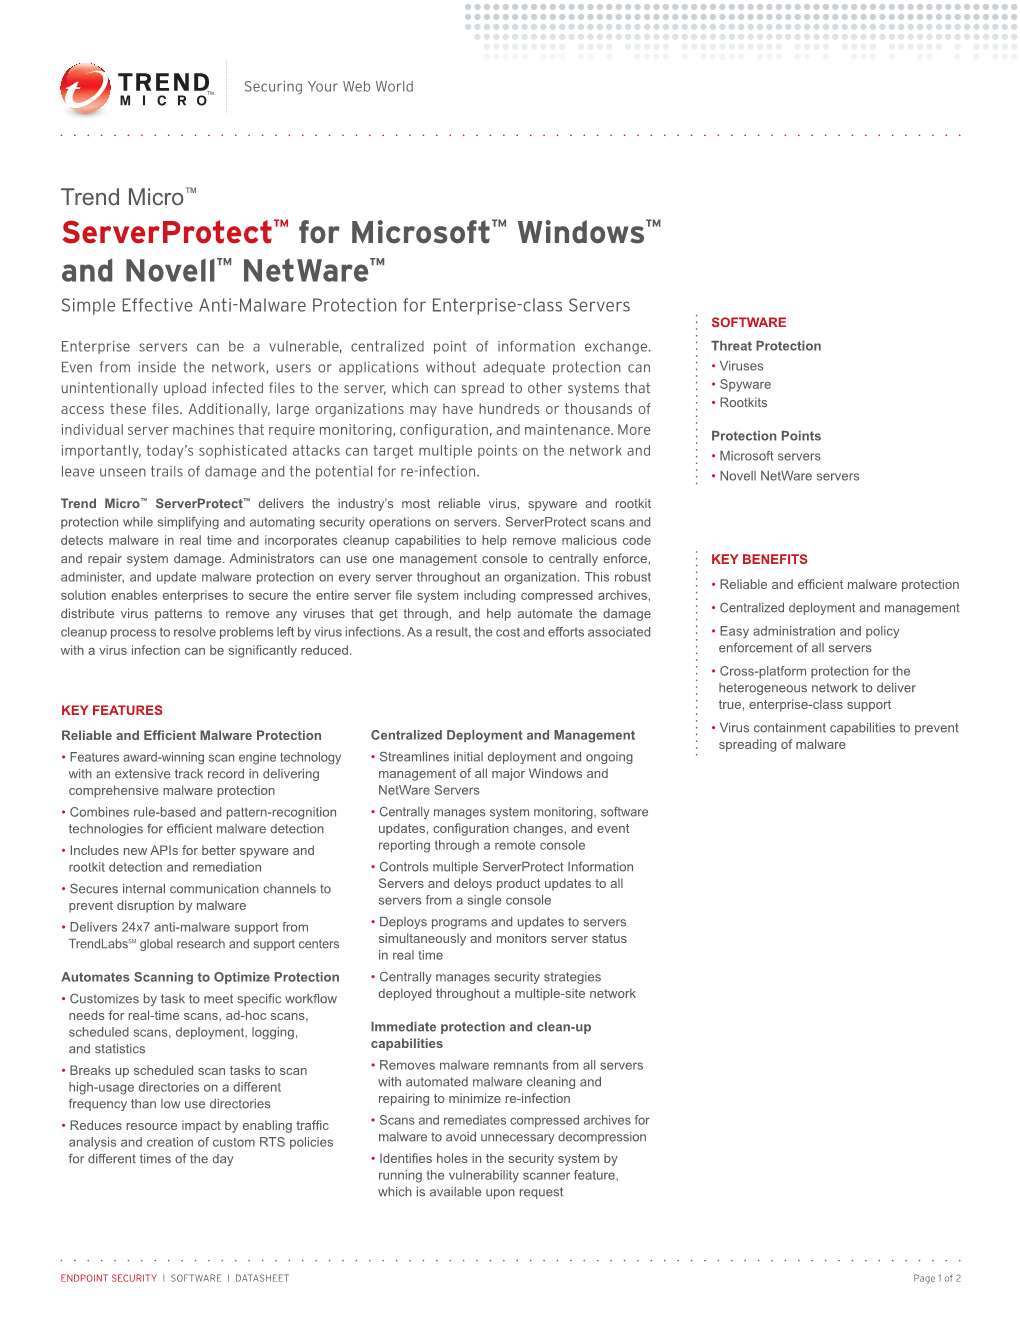 Serverprotect™ for Microsoft™ Windows™ and Novell™ Netware™